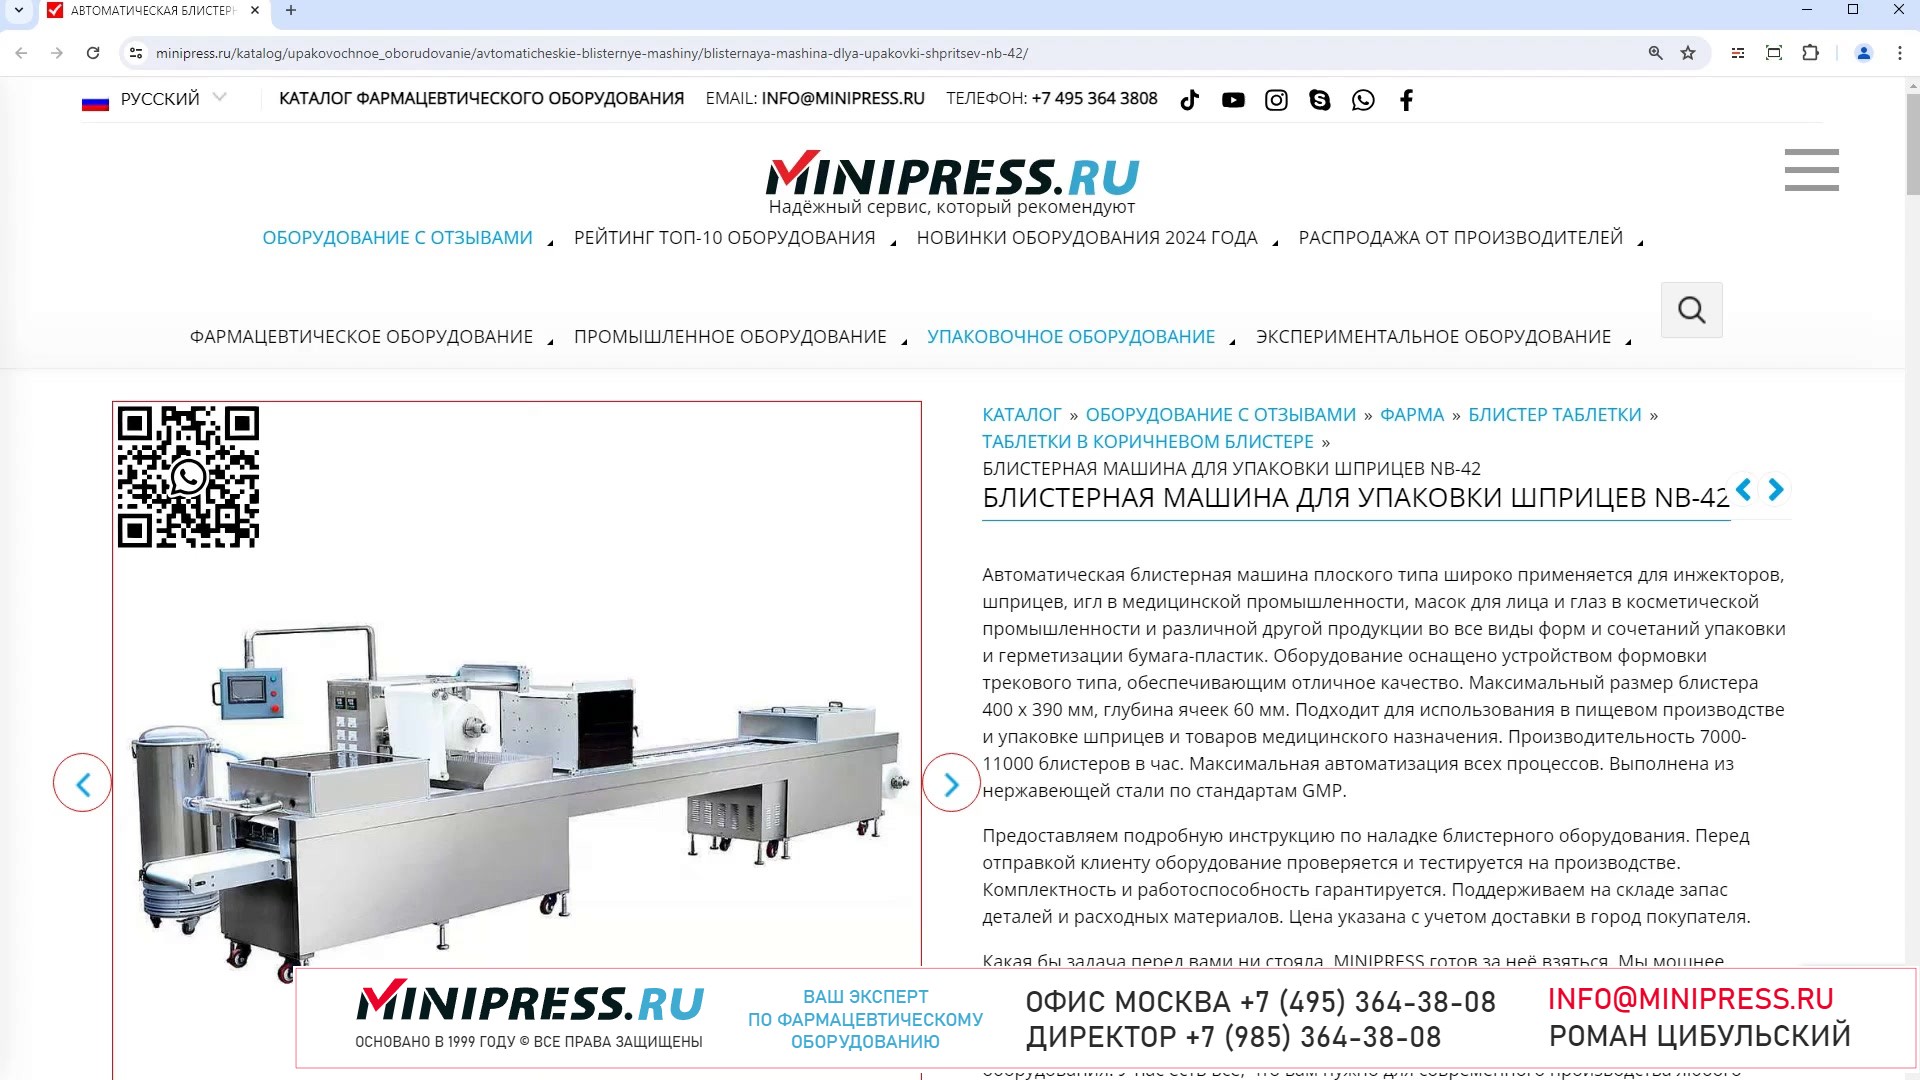 Minipress.ru Блистерная машина для упаковки шприцев NB-42